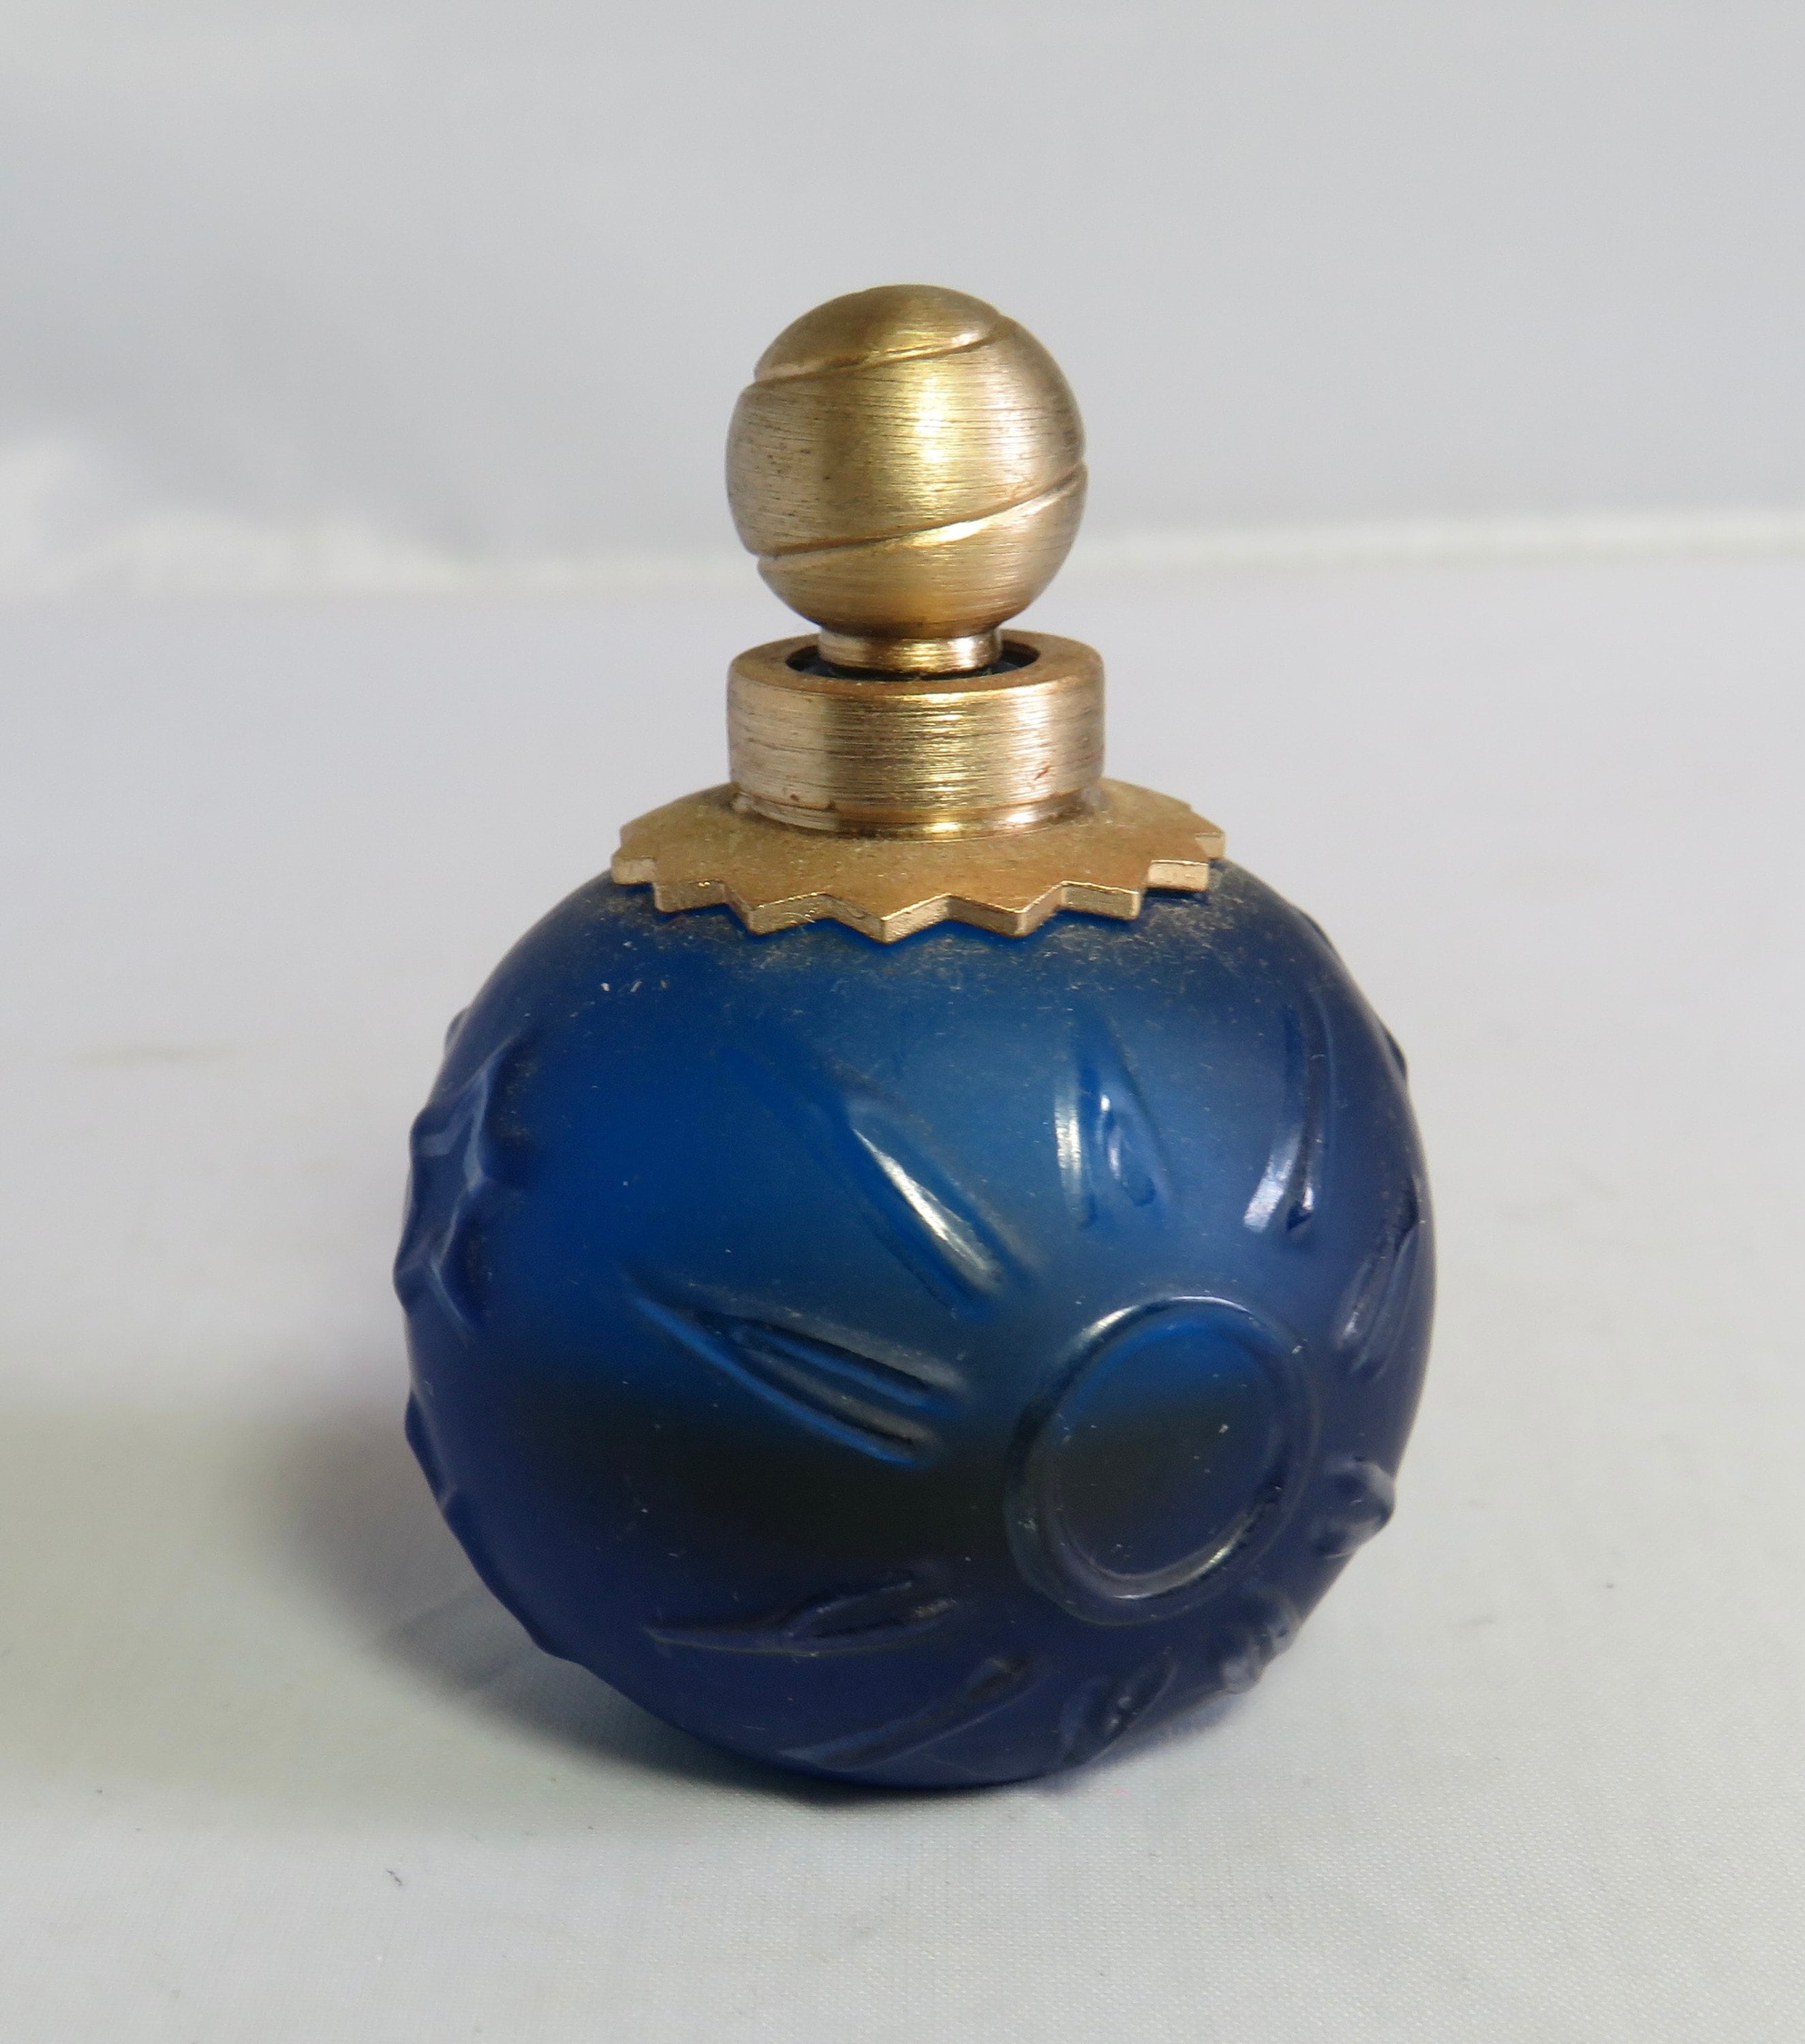 Karl Lagerfeld Sun Moon Stars Parfum Perfume Mini Miniature Sample w/ Box  3.7ml